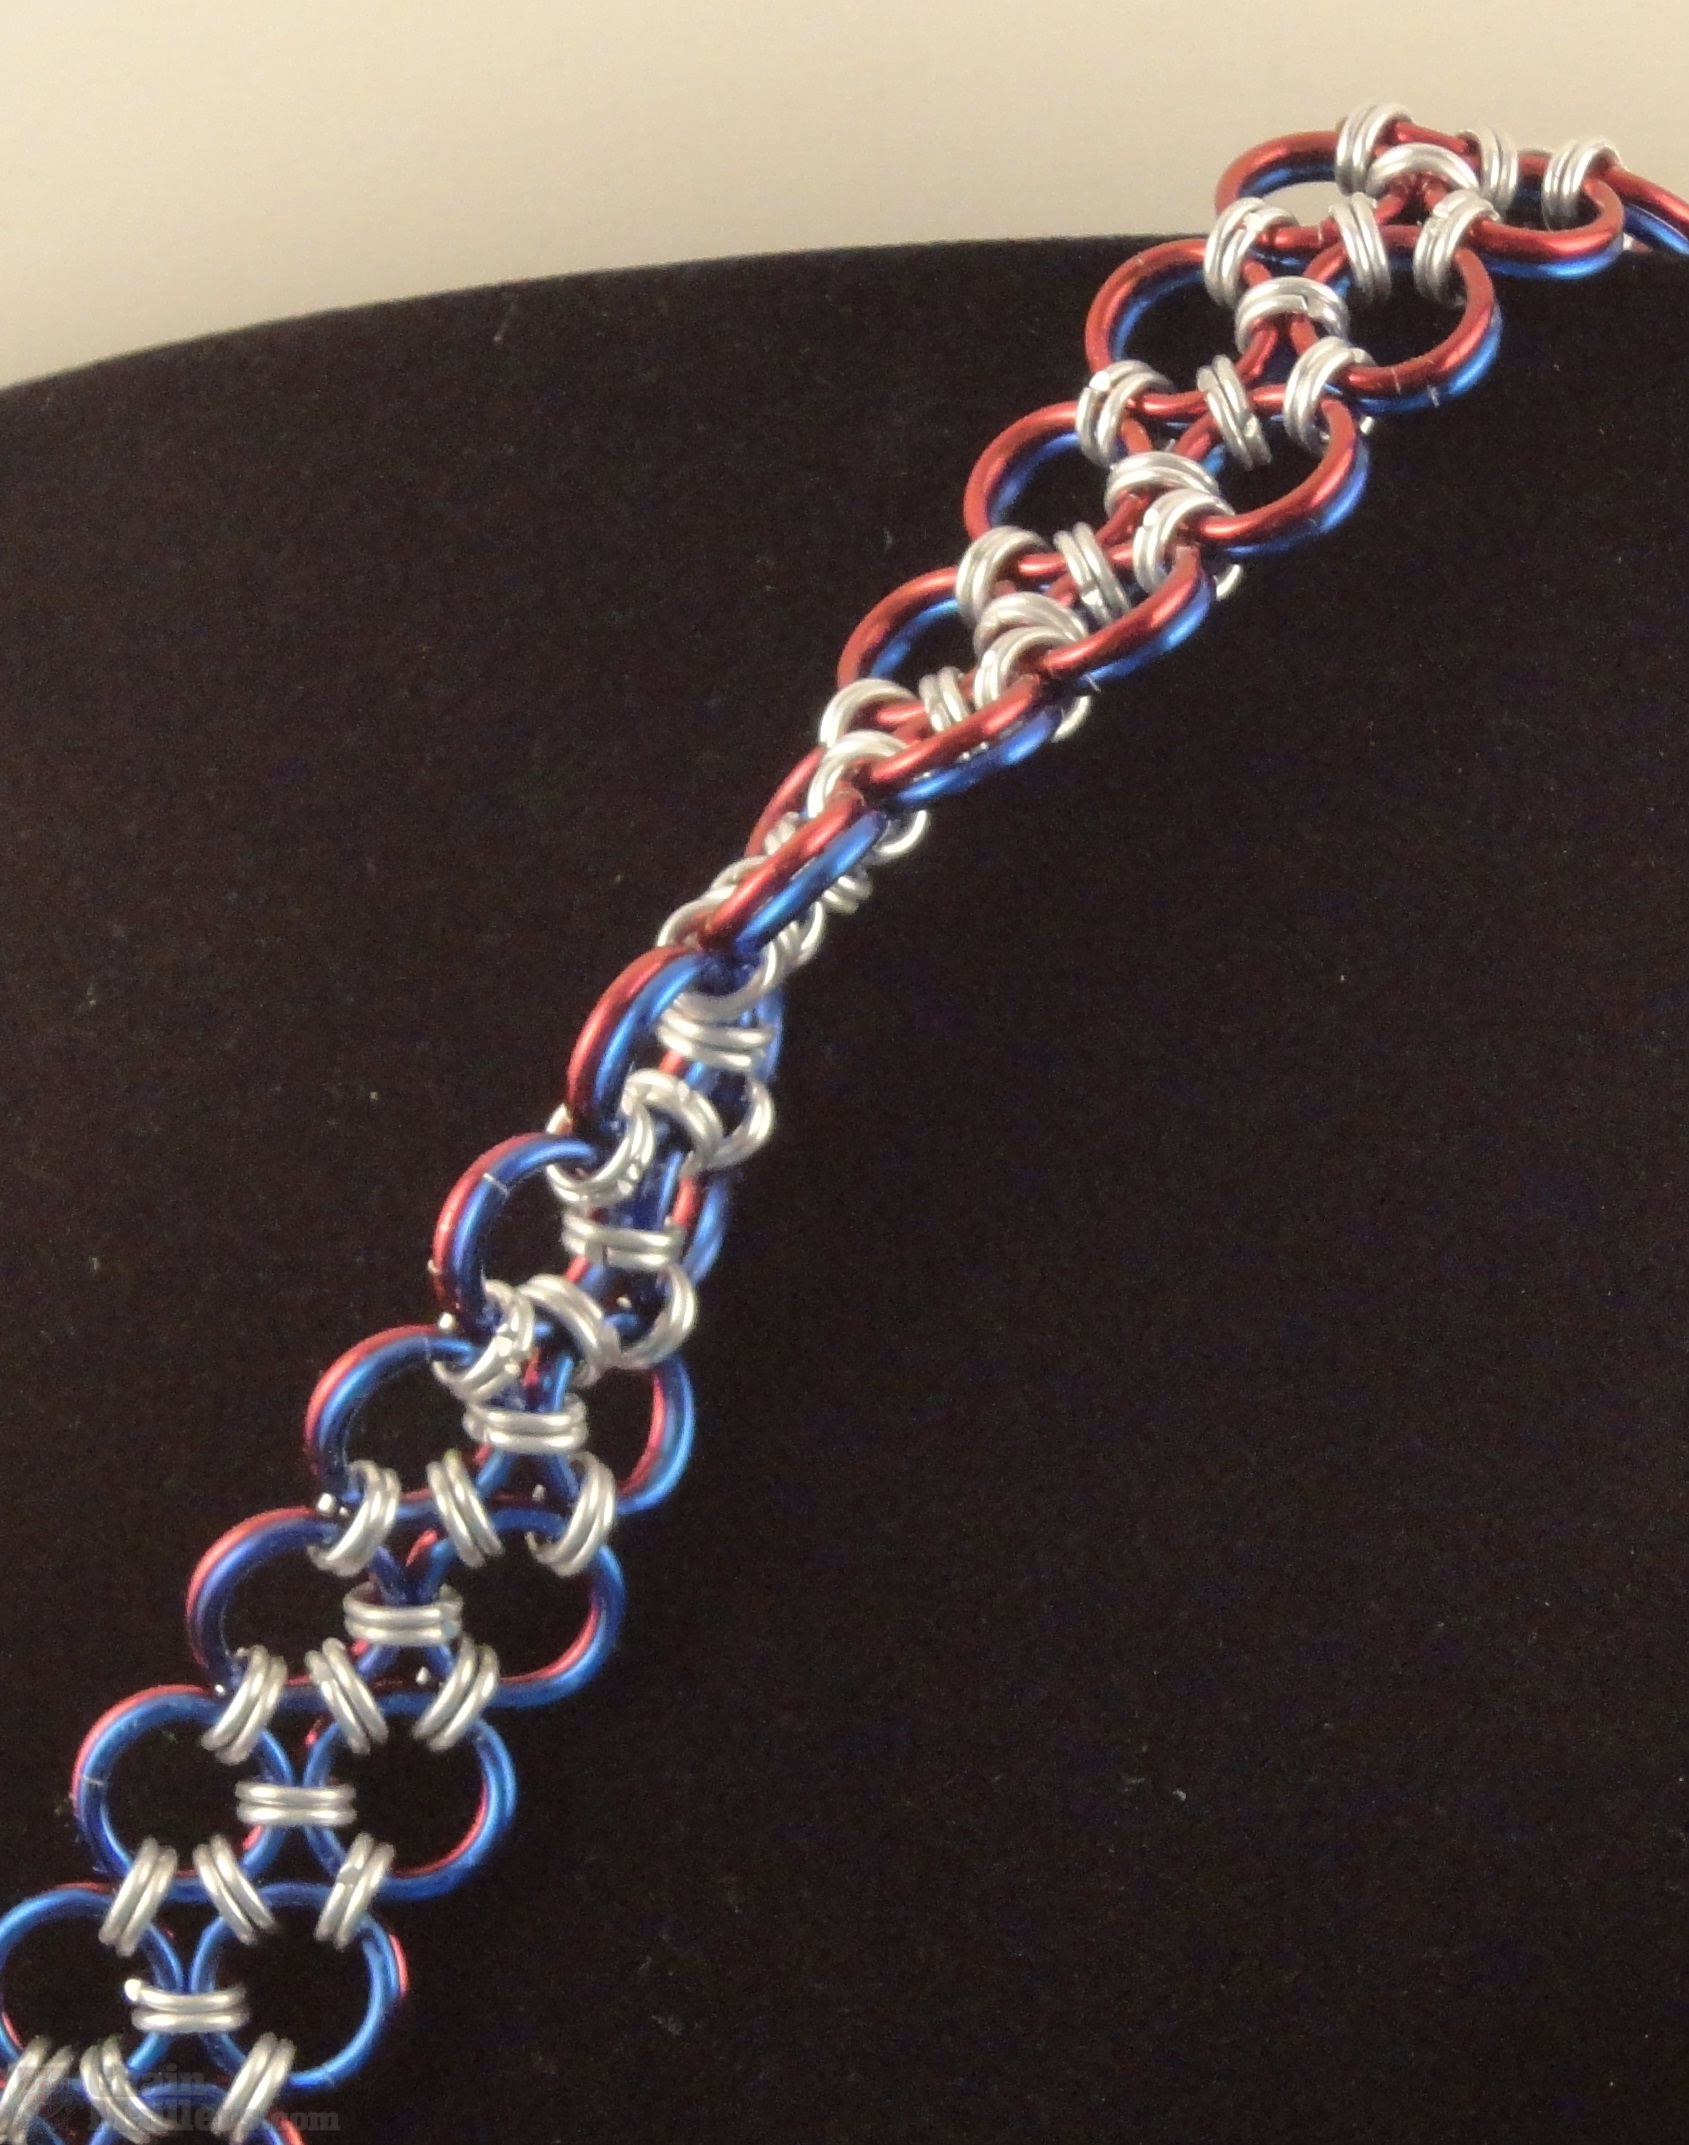 Reversible Japanese Lace bracelet